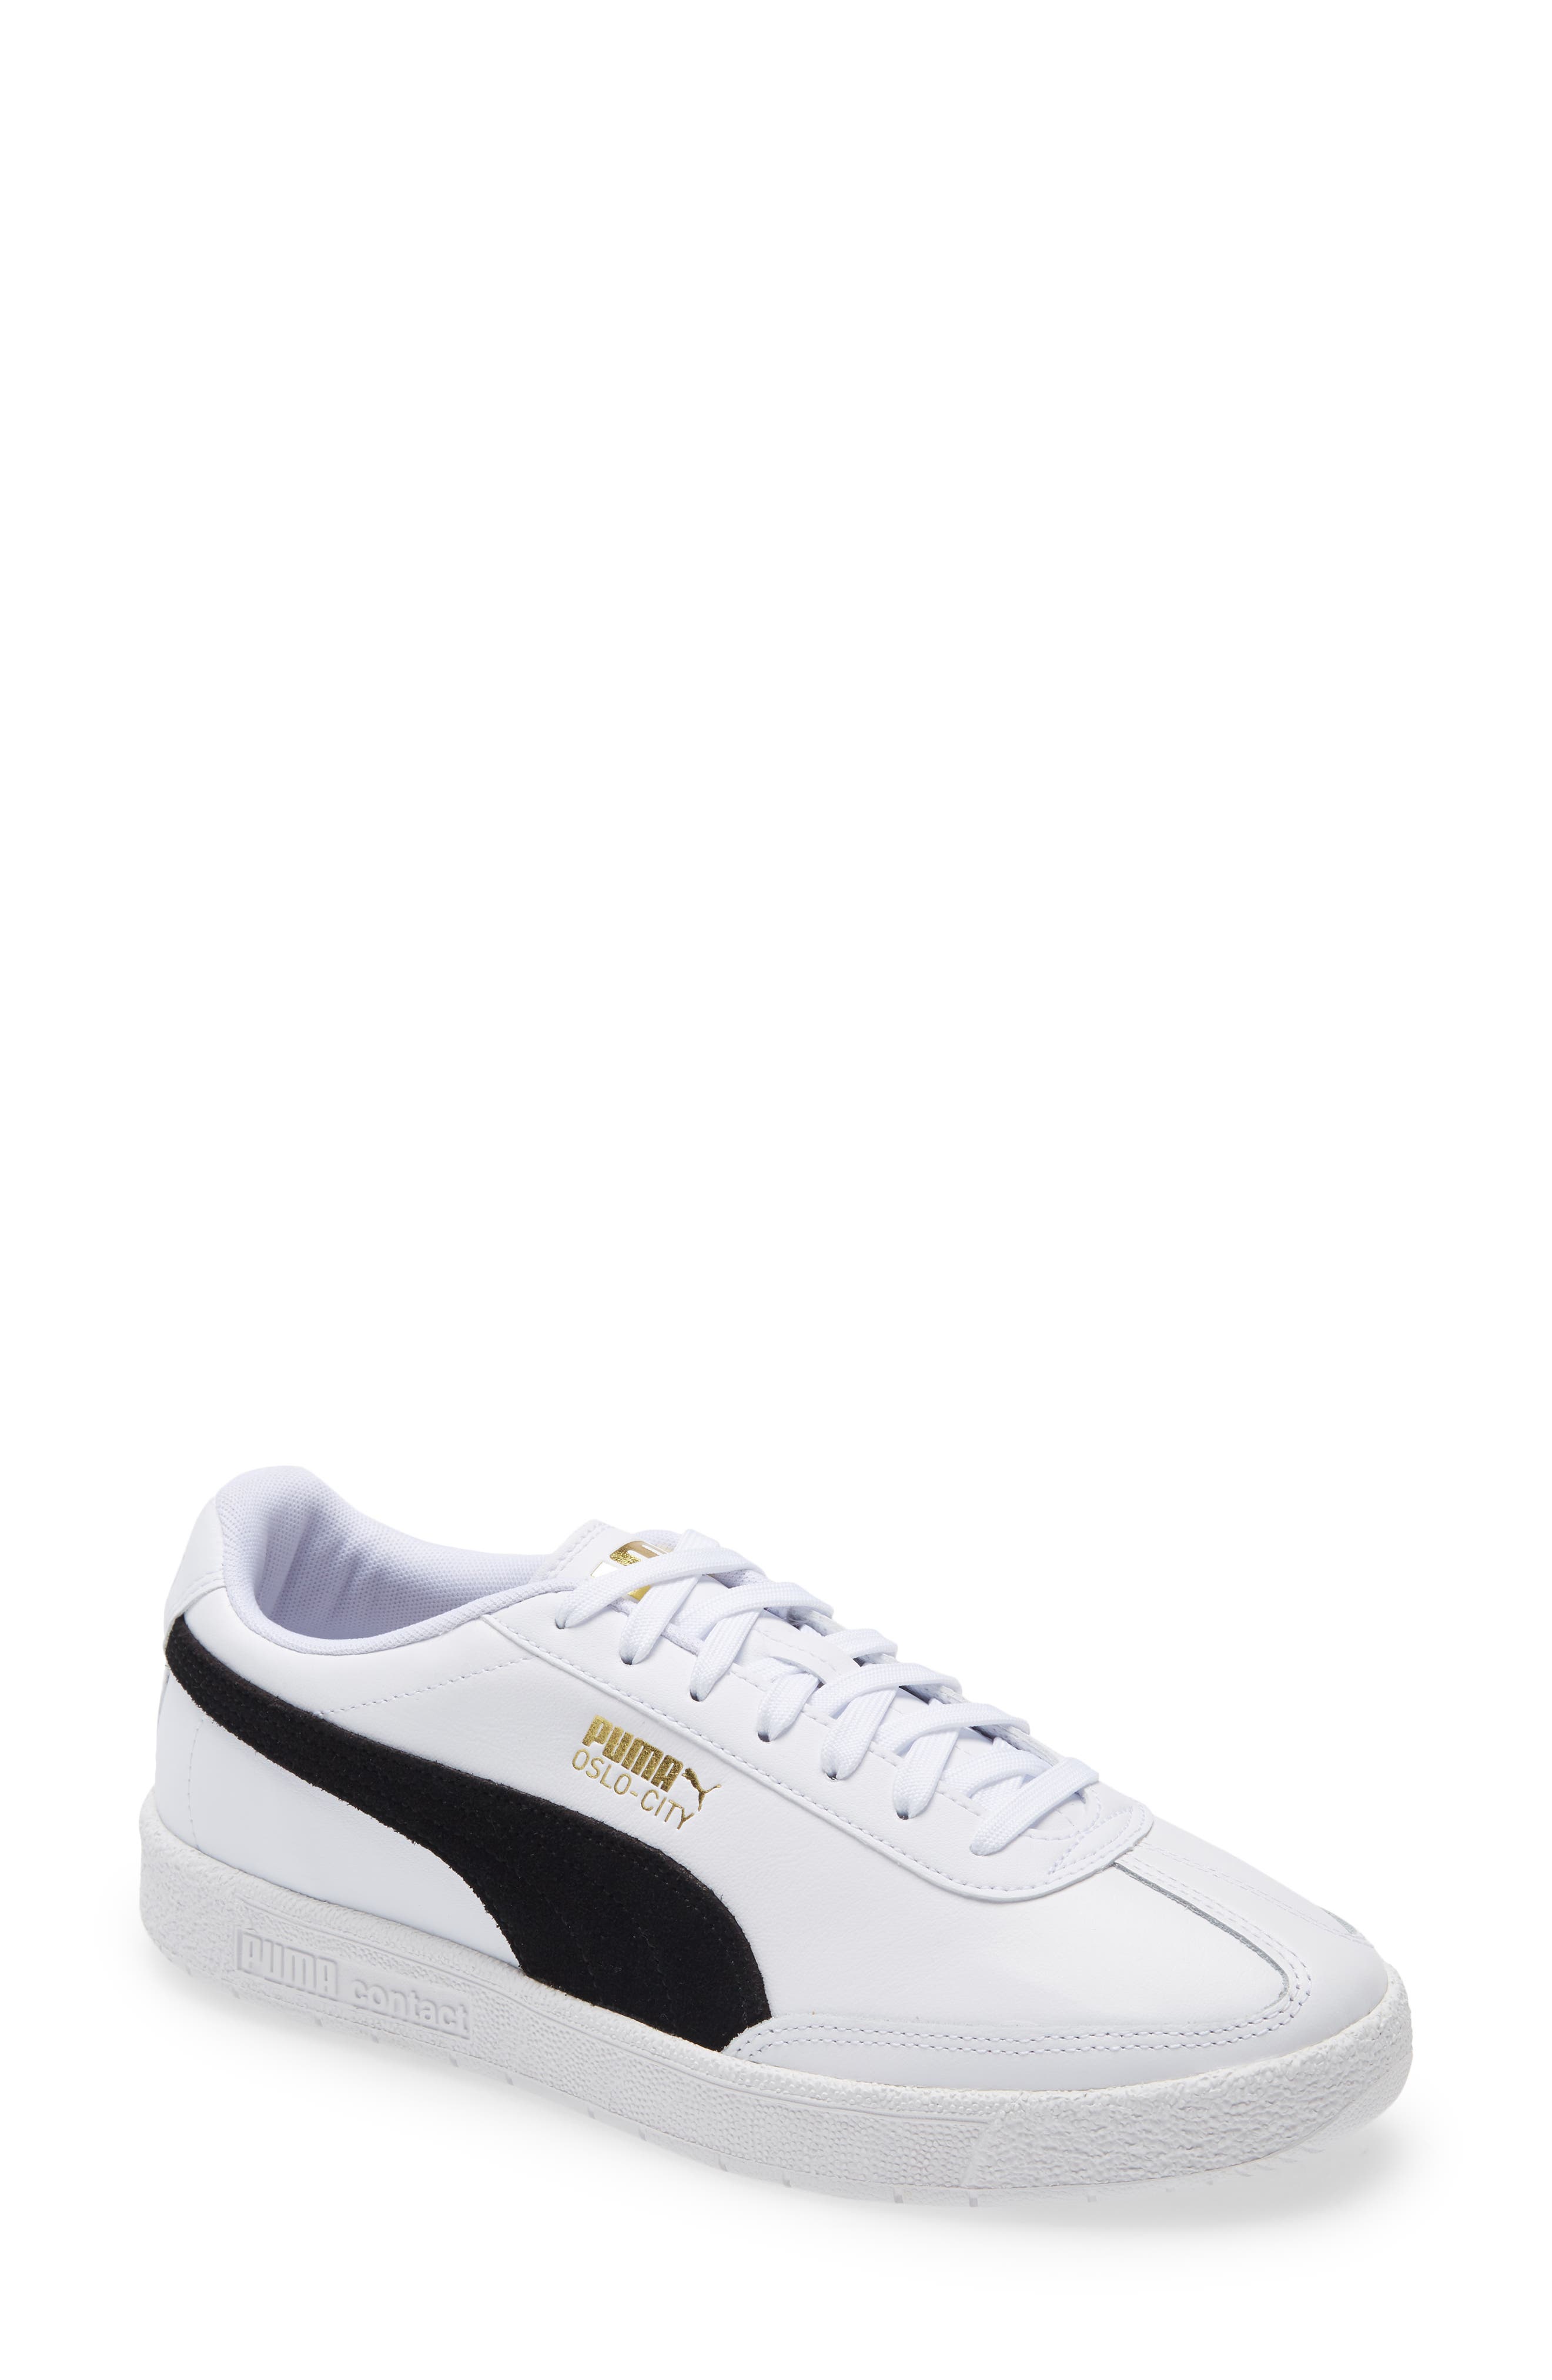 puma sneakers shoes white